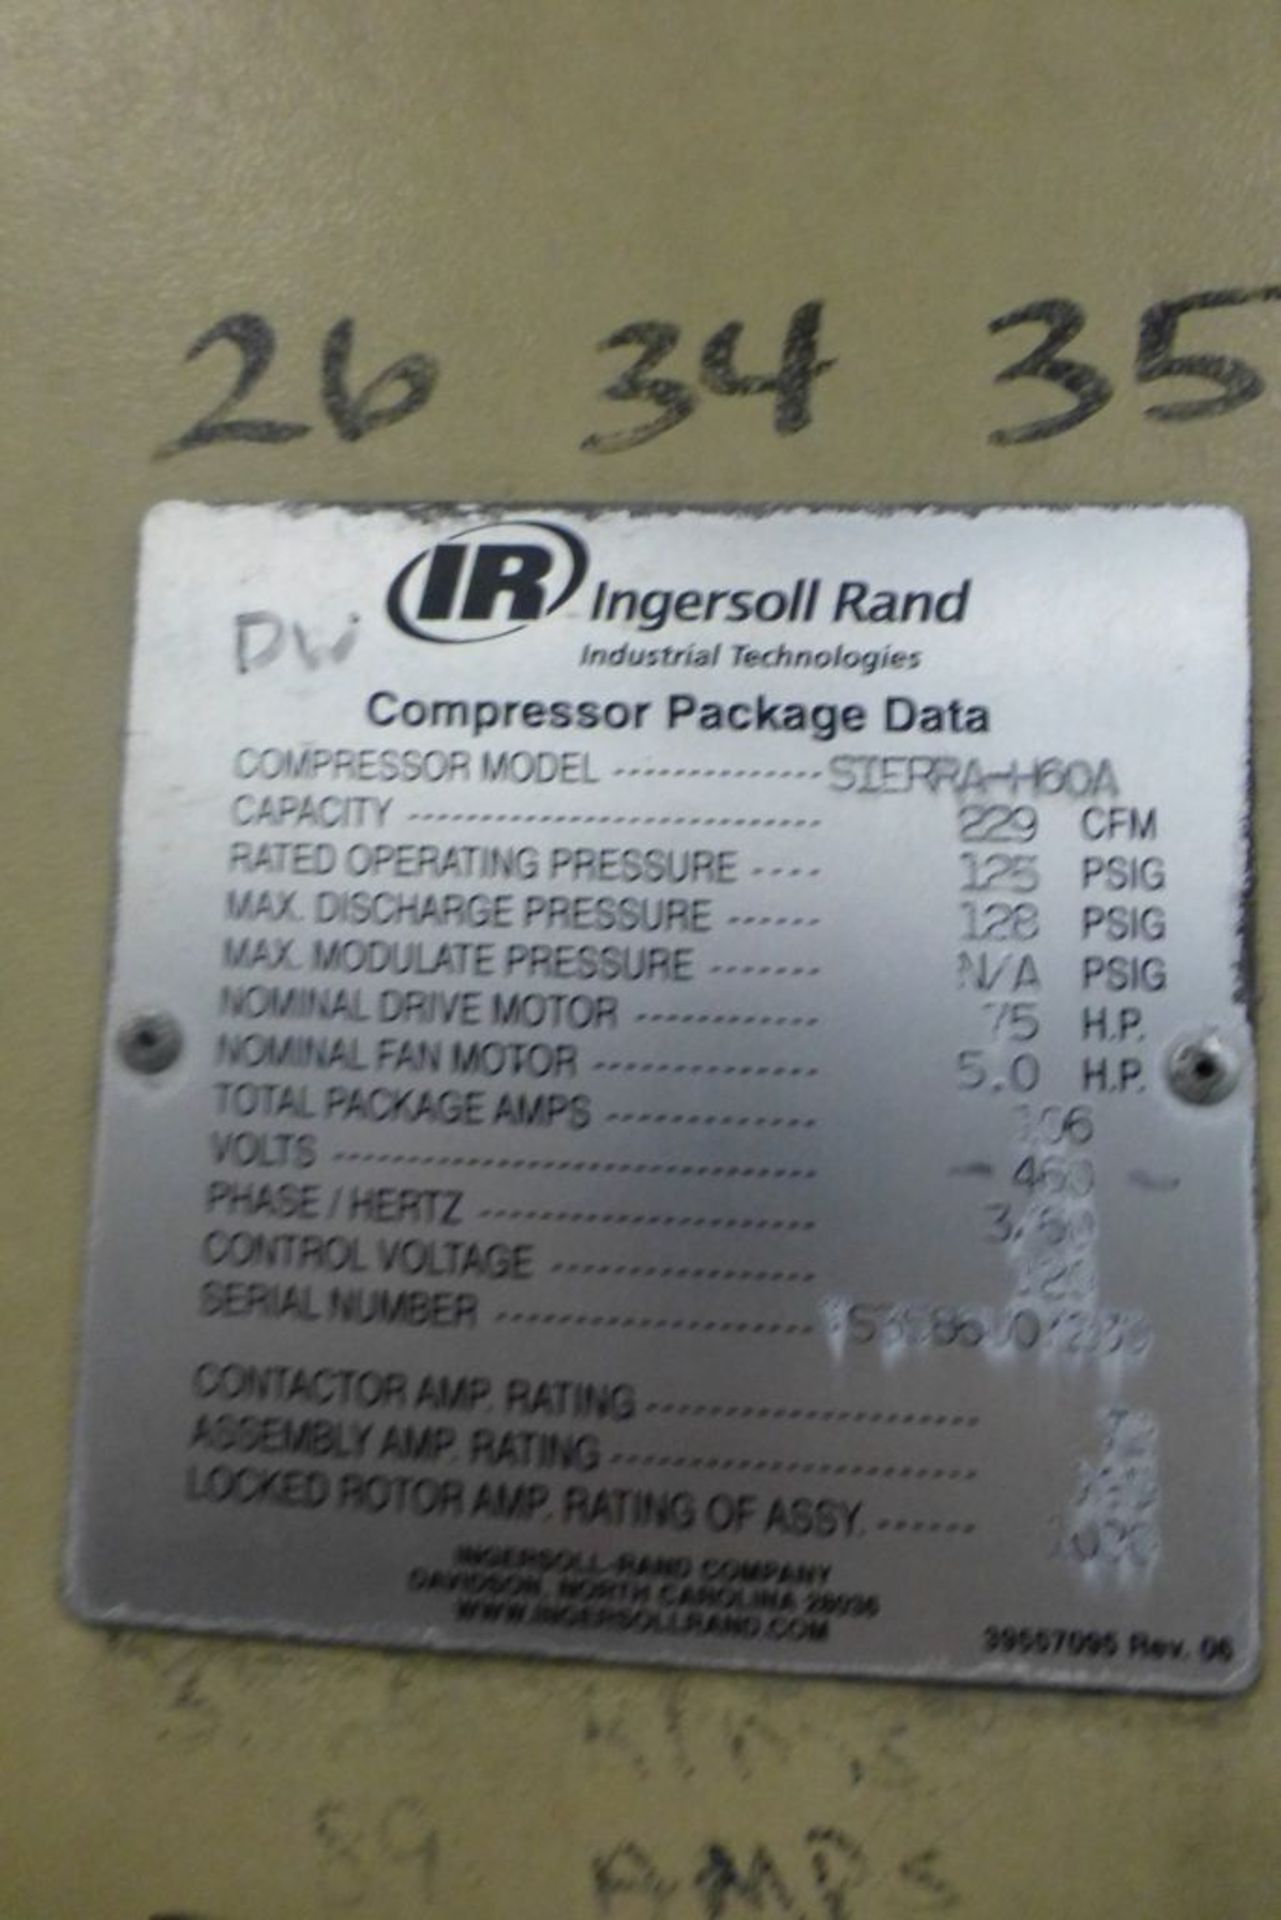 Ingersoll Rand Compressor | Part No. SIERRA-H60A; 75 HP; 460V; 125 PSI; 229 CFM Cap; 3PH - Image 5 of 22